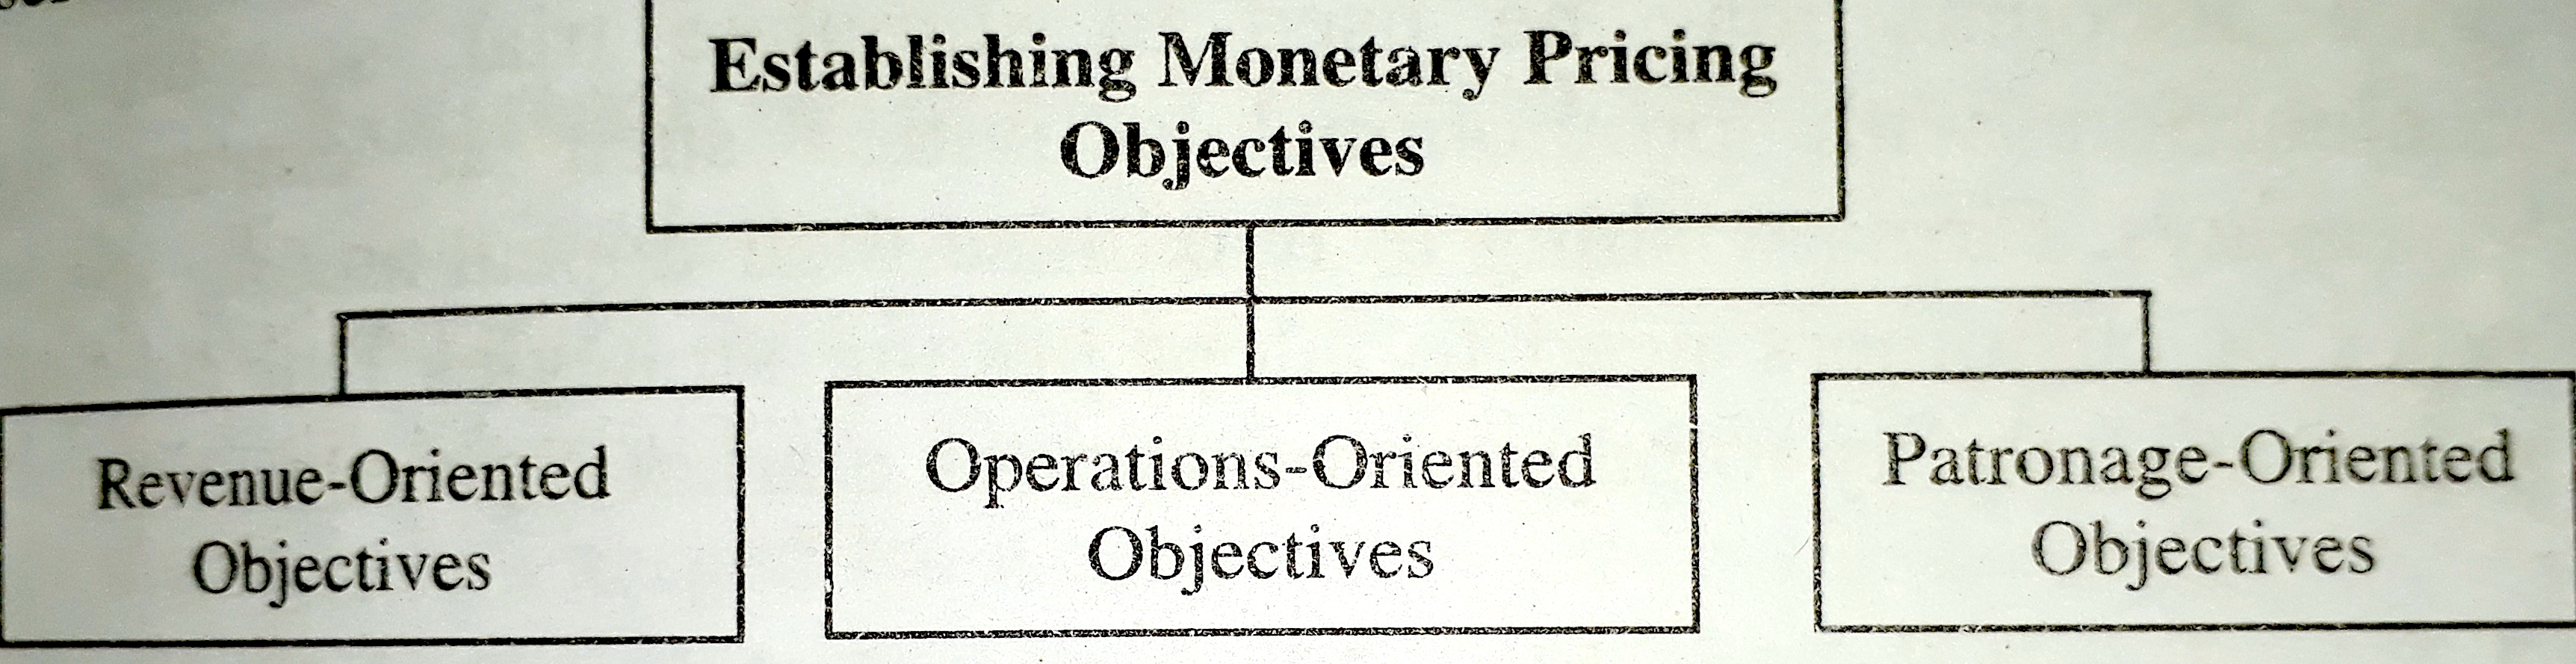 Establishing Monetary Pricing Objectives